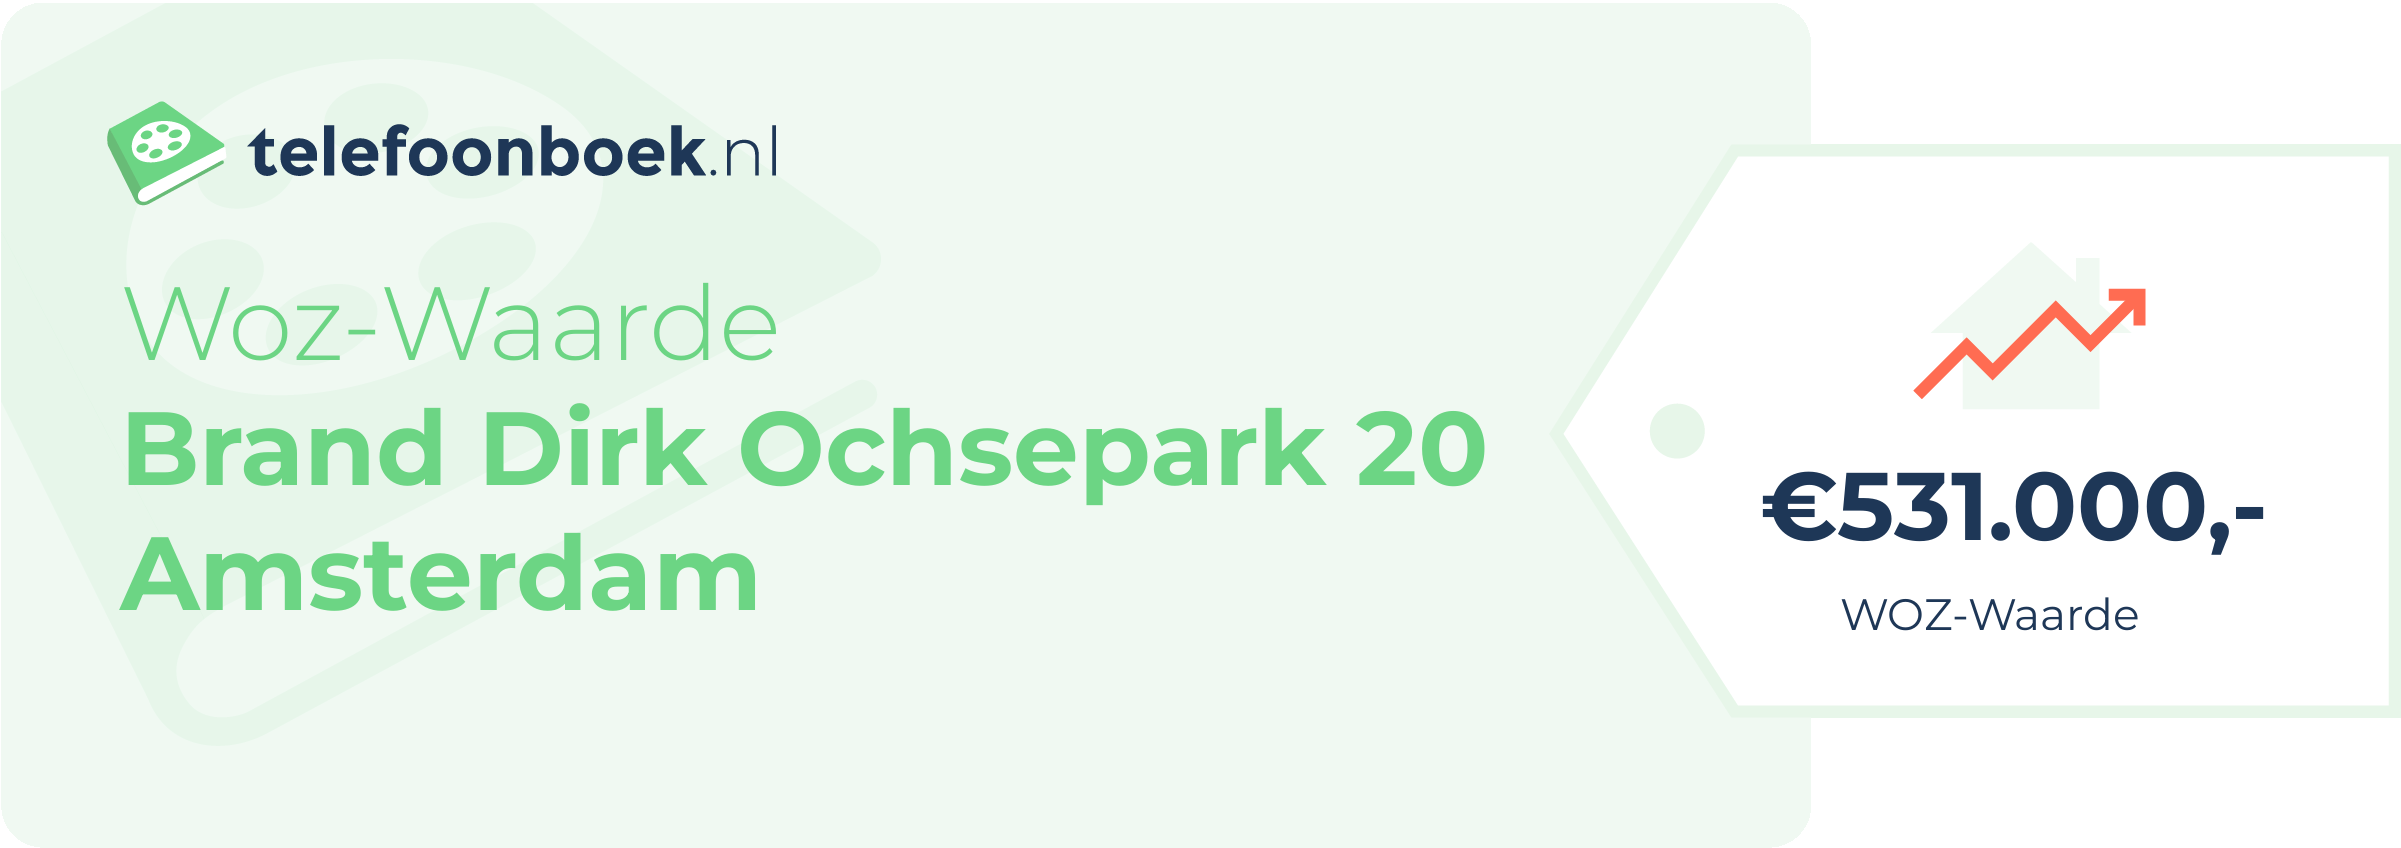 WOZ-waarde Brand Dirk Ochsepark 20 Amsterdam